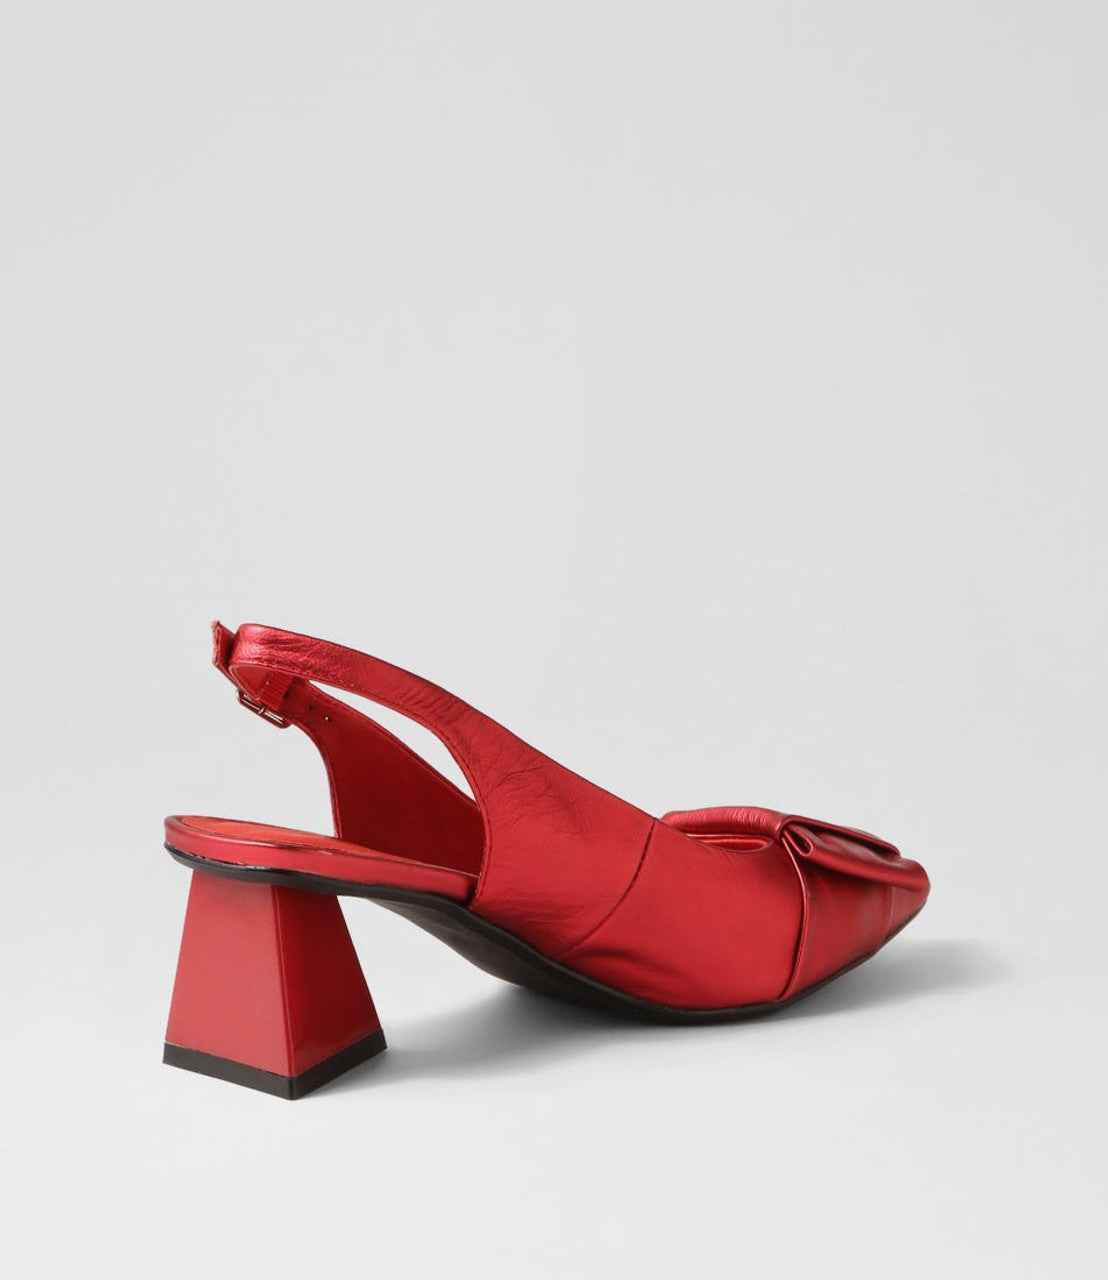 ITZEL SLING BACK - DJANGO AND JULIETTE - 36, 37, 38, 39, 40, 41, 42, black satin, red satin, womens footwear - Stomp Shoes Darwin